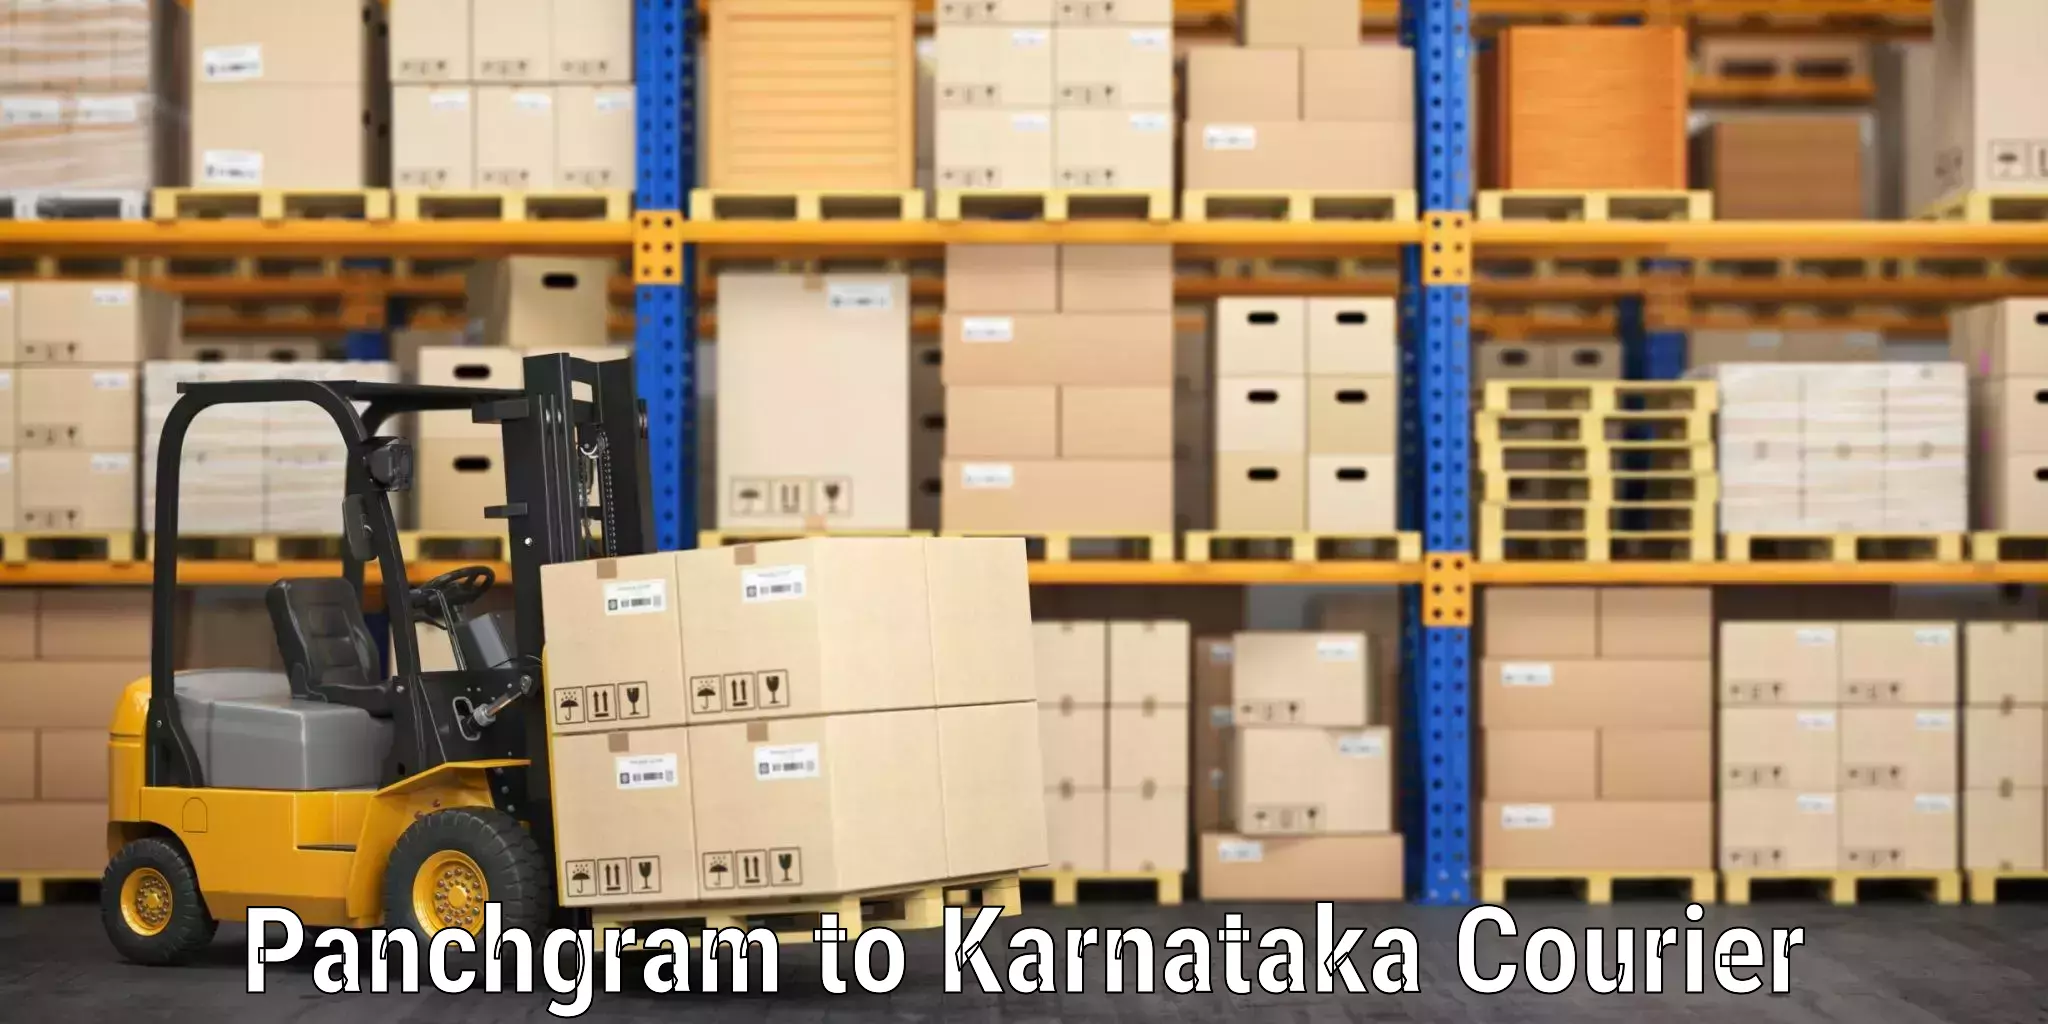 Baggage transport updates Panchgram to Kanakapura